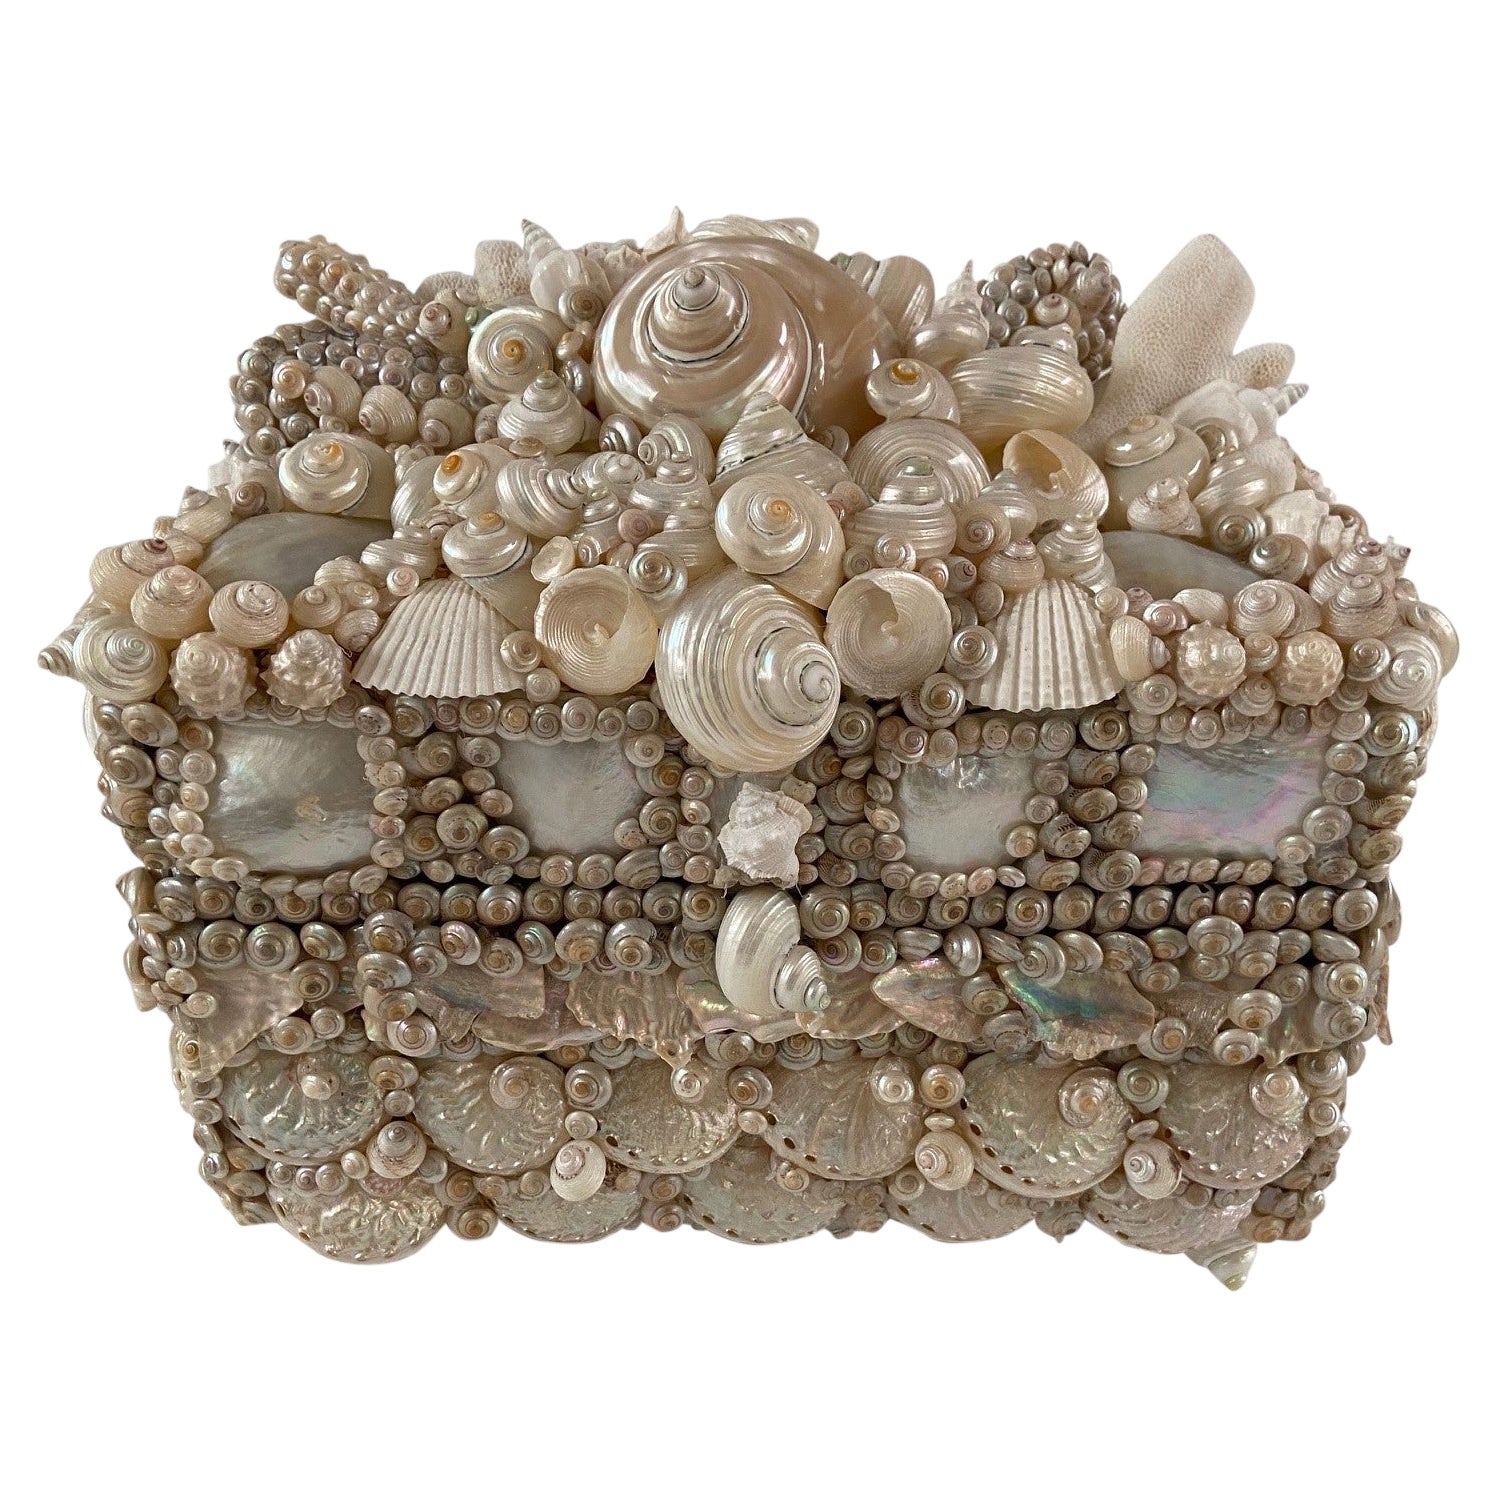 Beautiful Handmade Shell Encrusted Jewelry Box